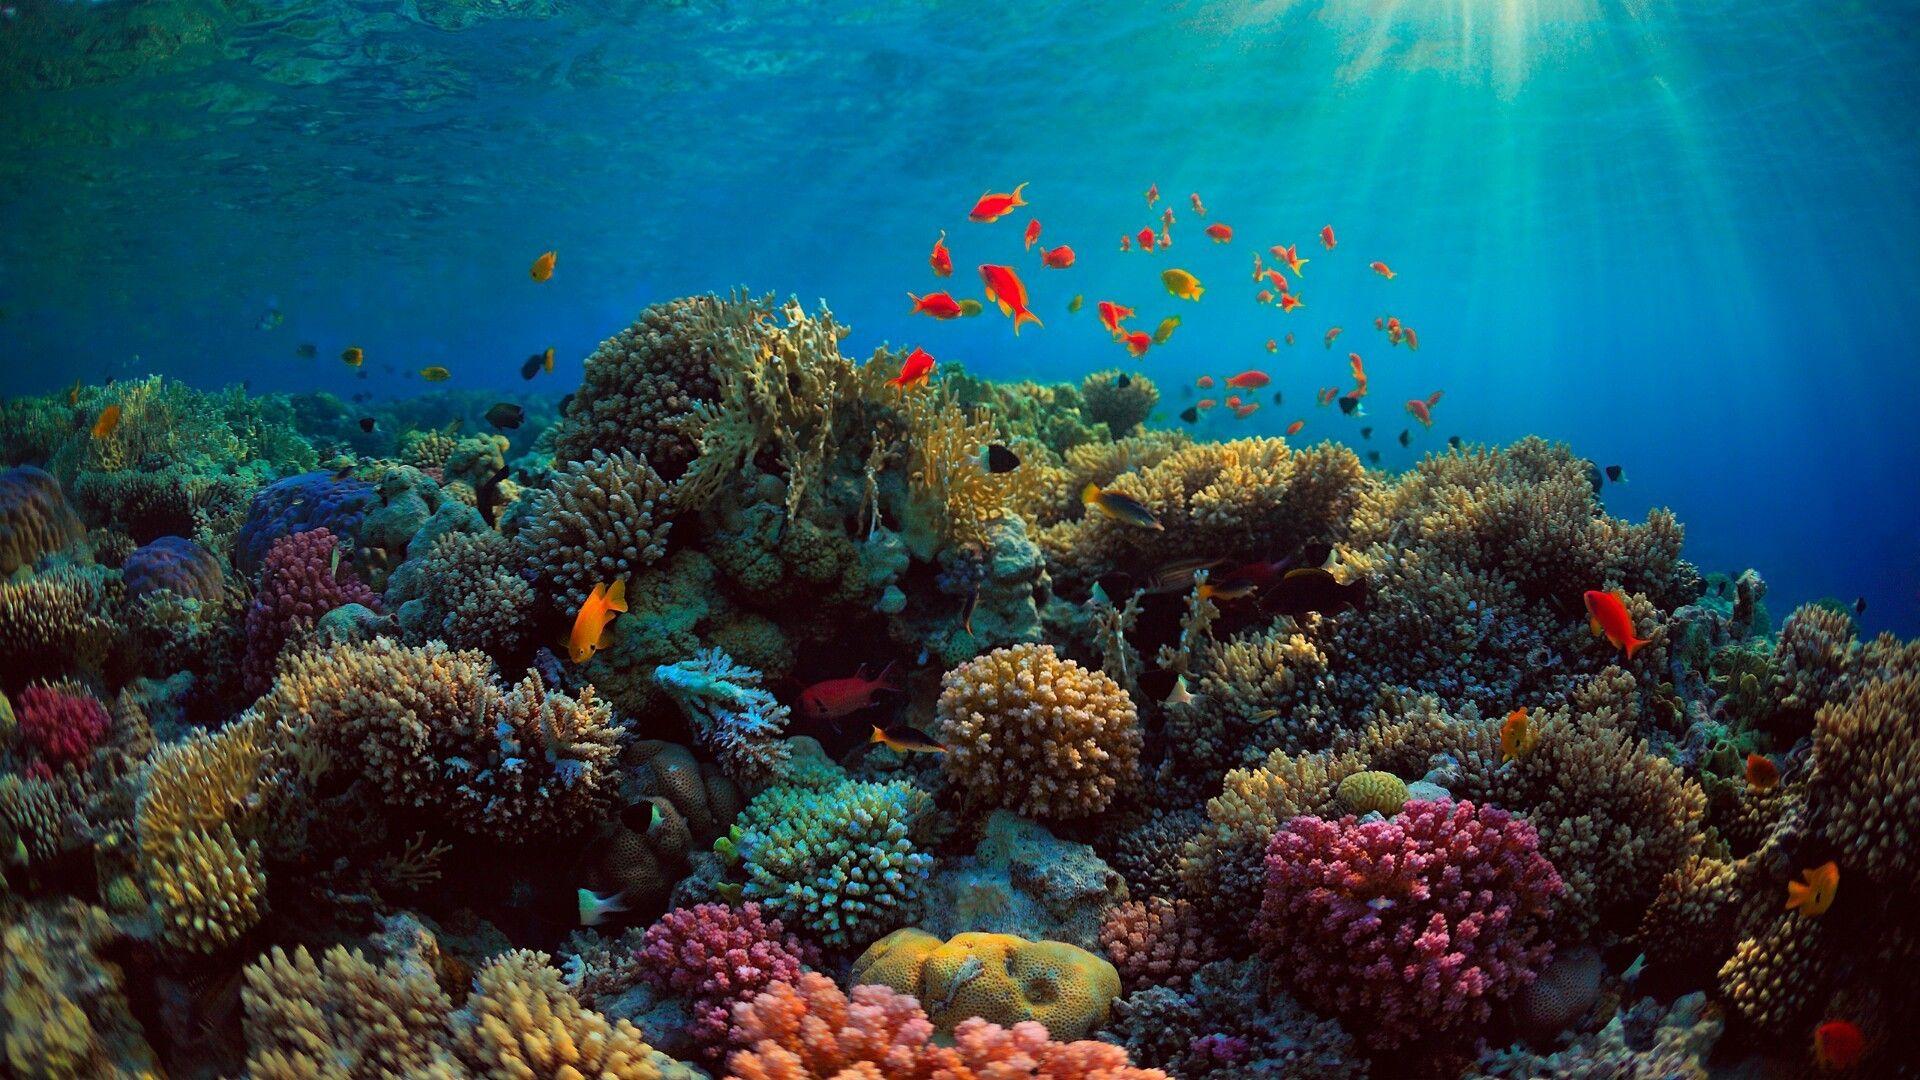 Coral Reef Desktop Wallpapers - Top Free Coral Reef Desktop Backgrounds